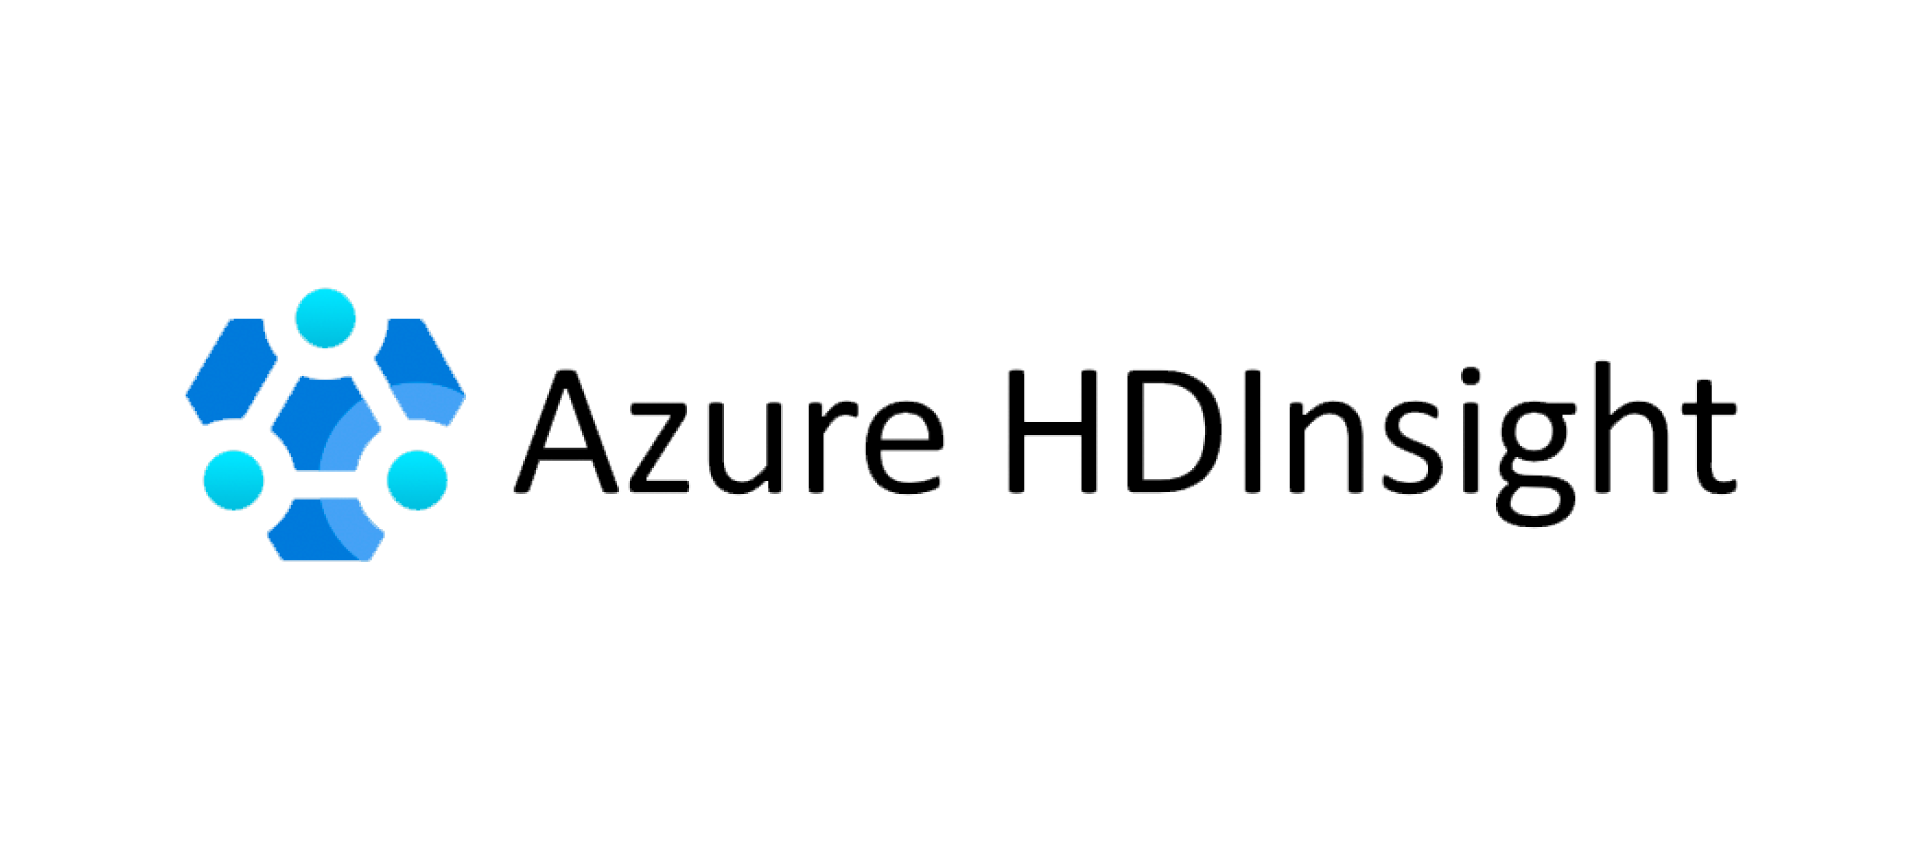 Azure HD insight